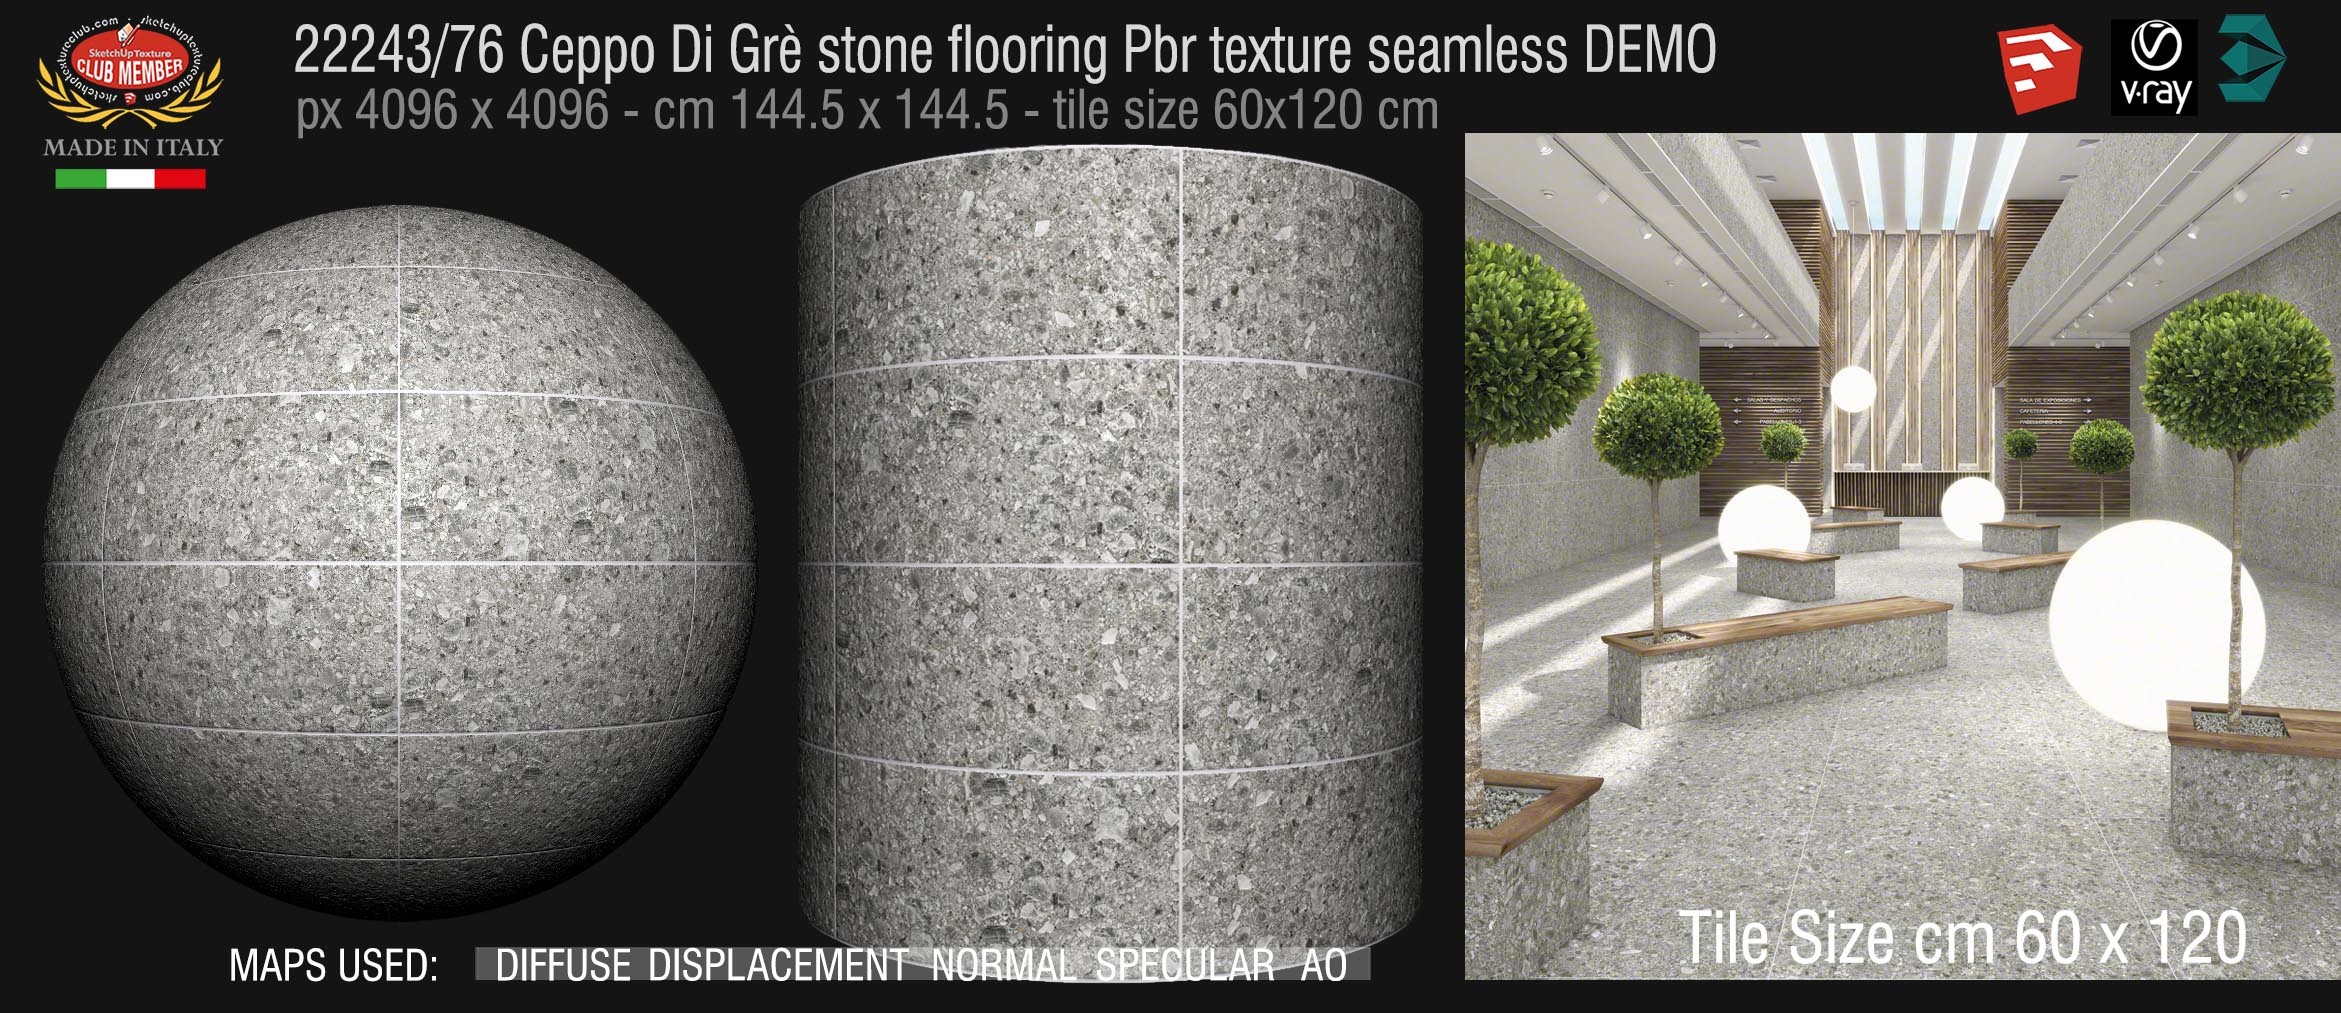 22243_76 Ceppo Di Grè stone flooring Pbr texture seamless DEMO - INTERIOR / OUTDOOR Paving - tile size 60x120 cm